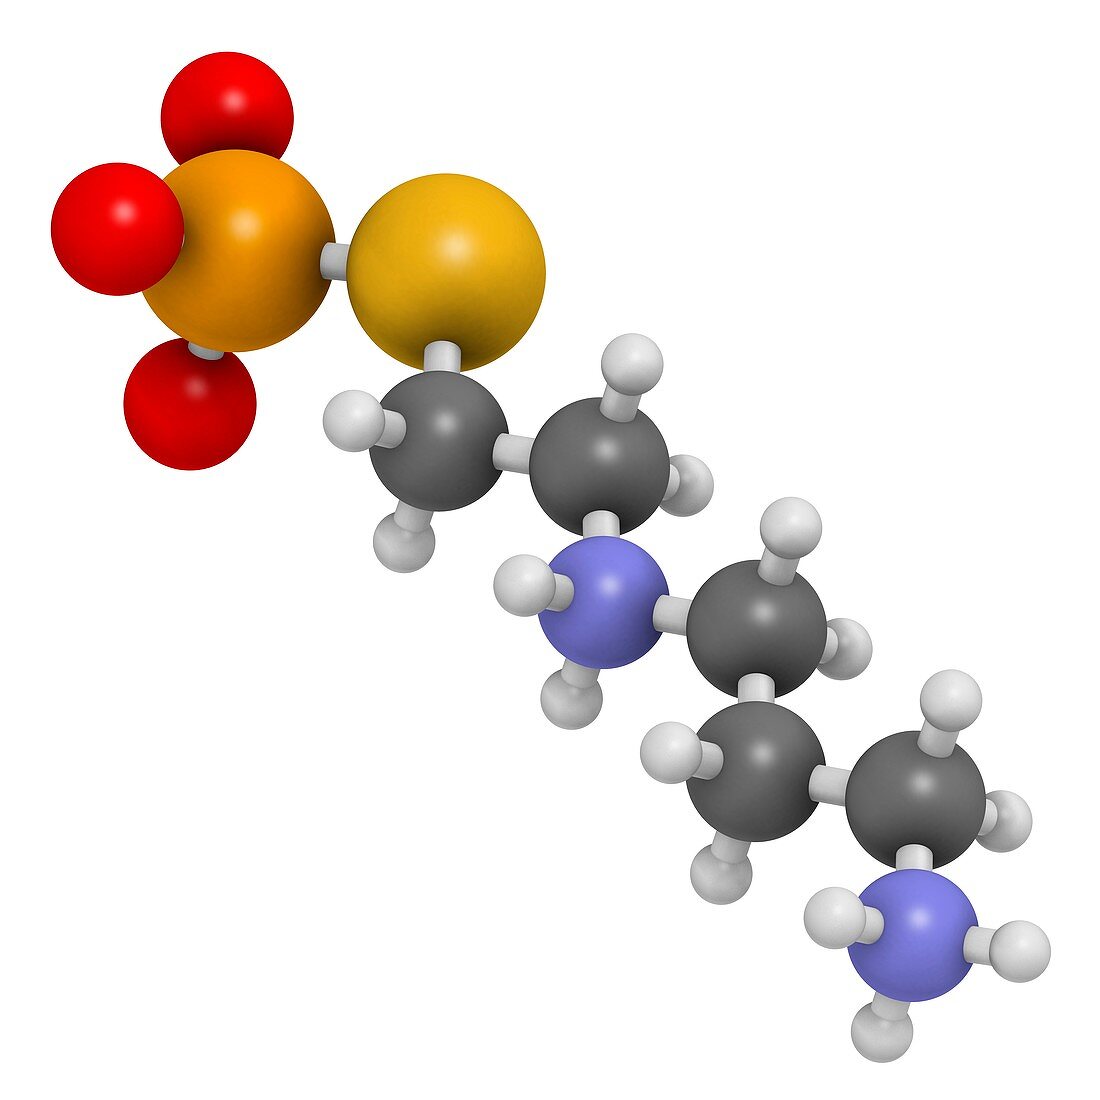 Amifostine cancer drug molecule